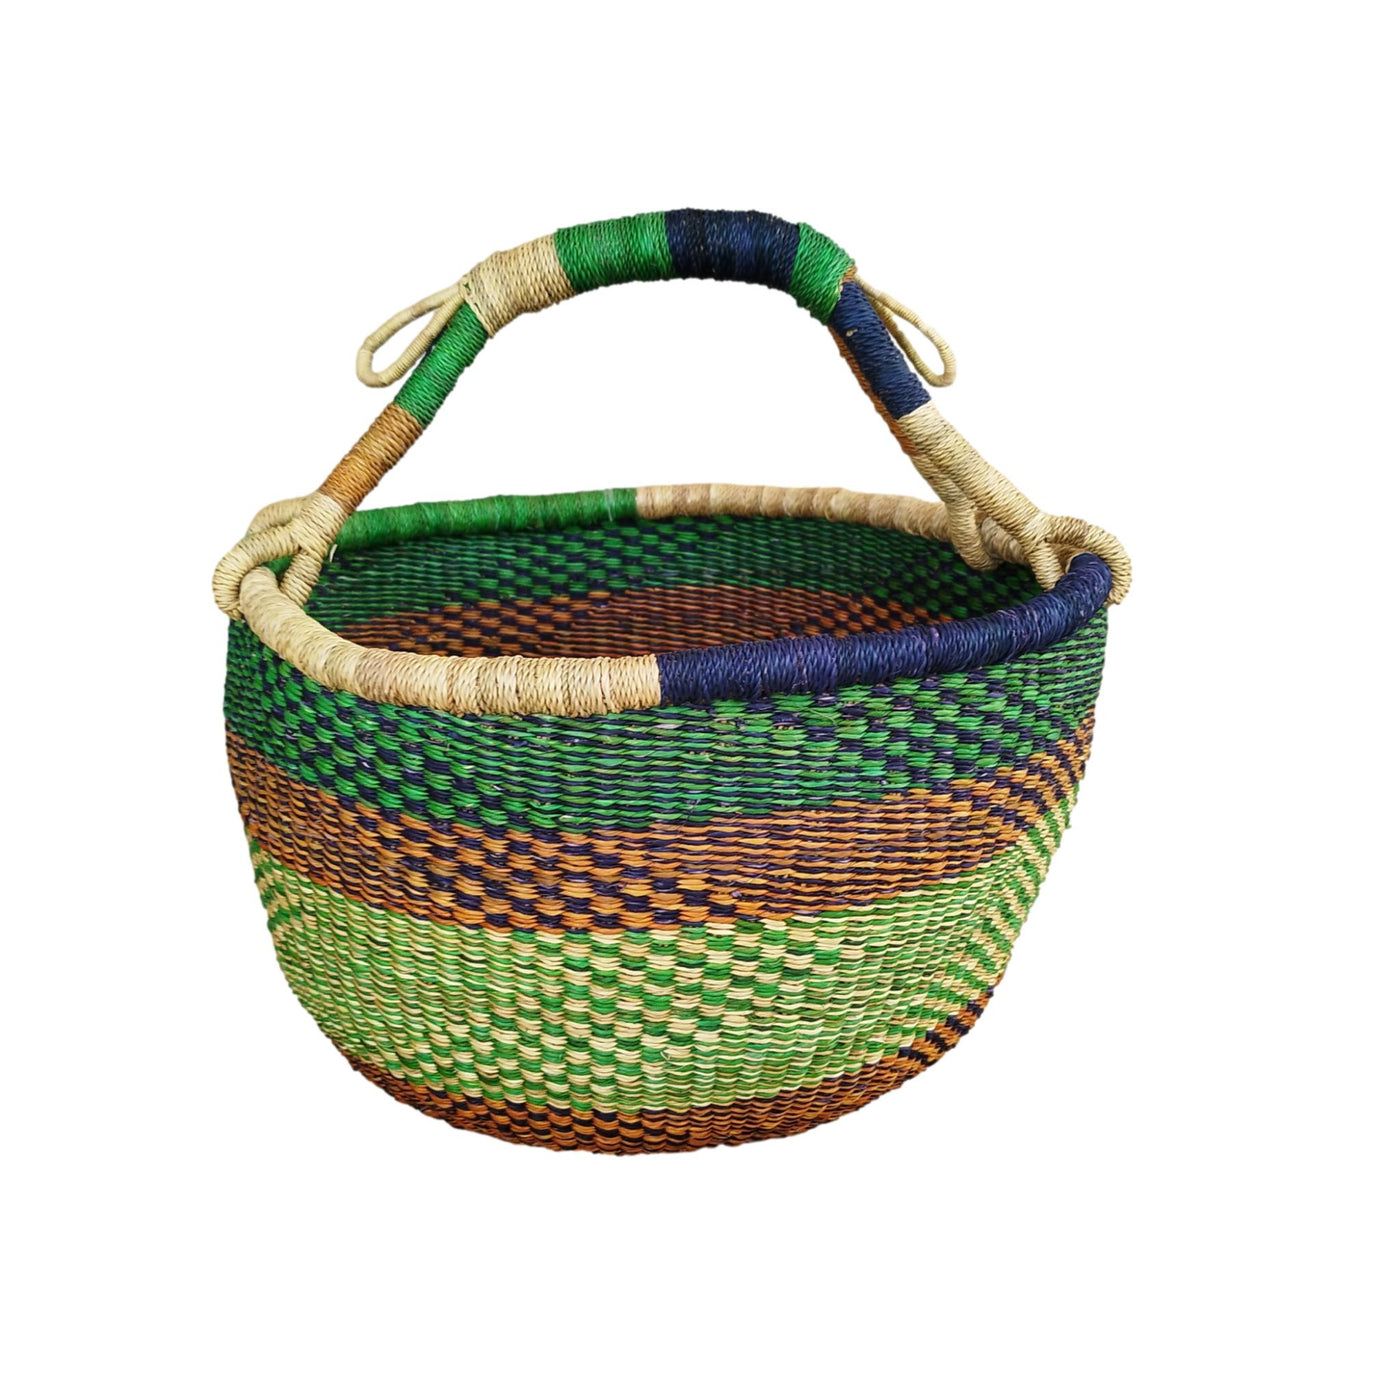 Straw basket | Flower girl basket | African basket | Desk organizer | Straw handbag | Shopping basket | Fruit basket | beach bag